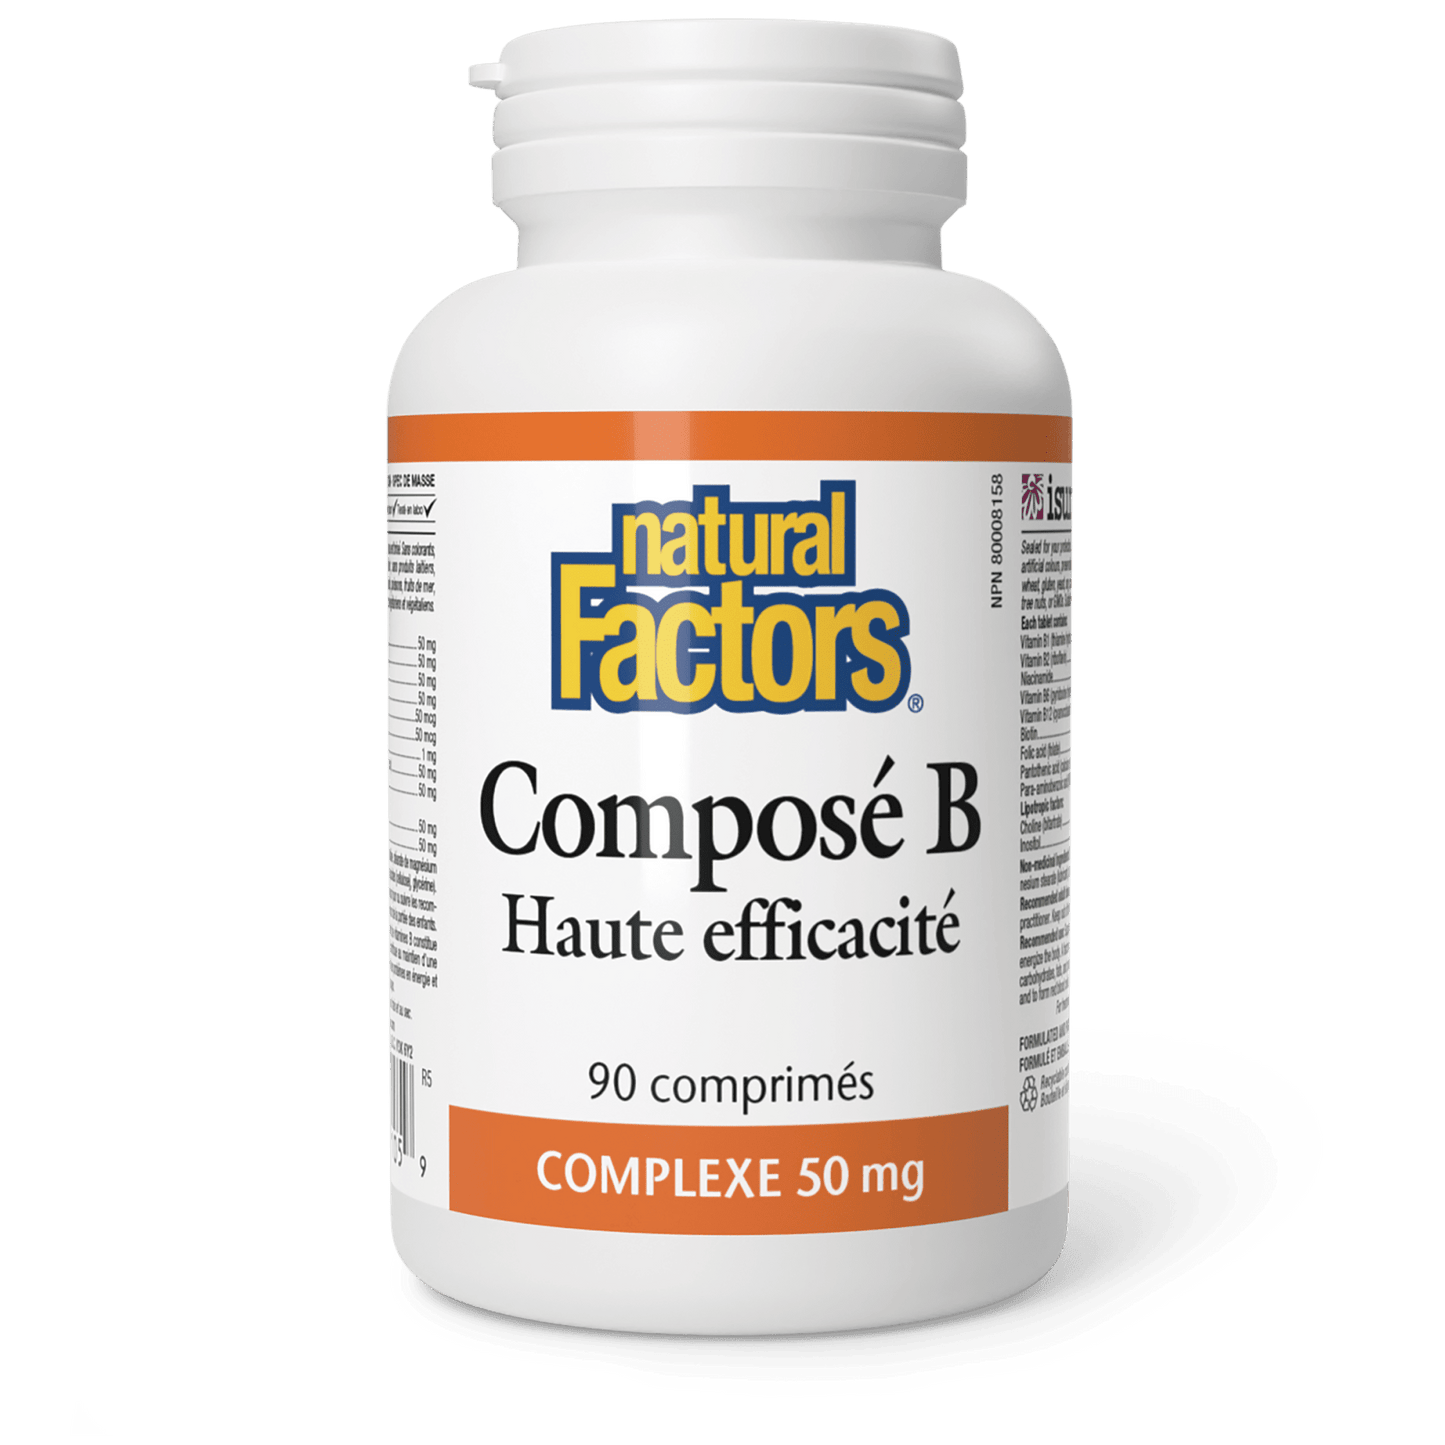 Composé B Haute efficacité Complexe 50 mg, Natural Factors|v|image|1105